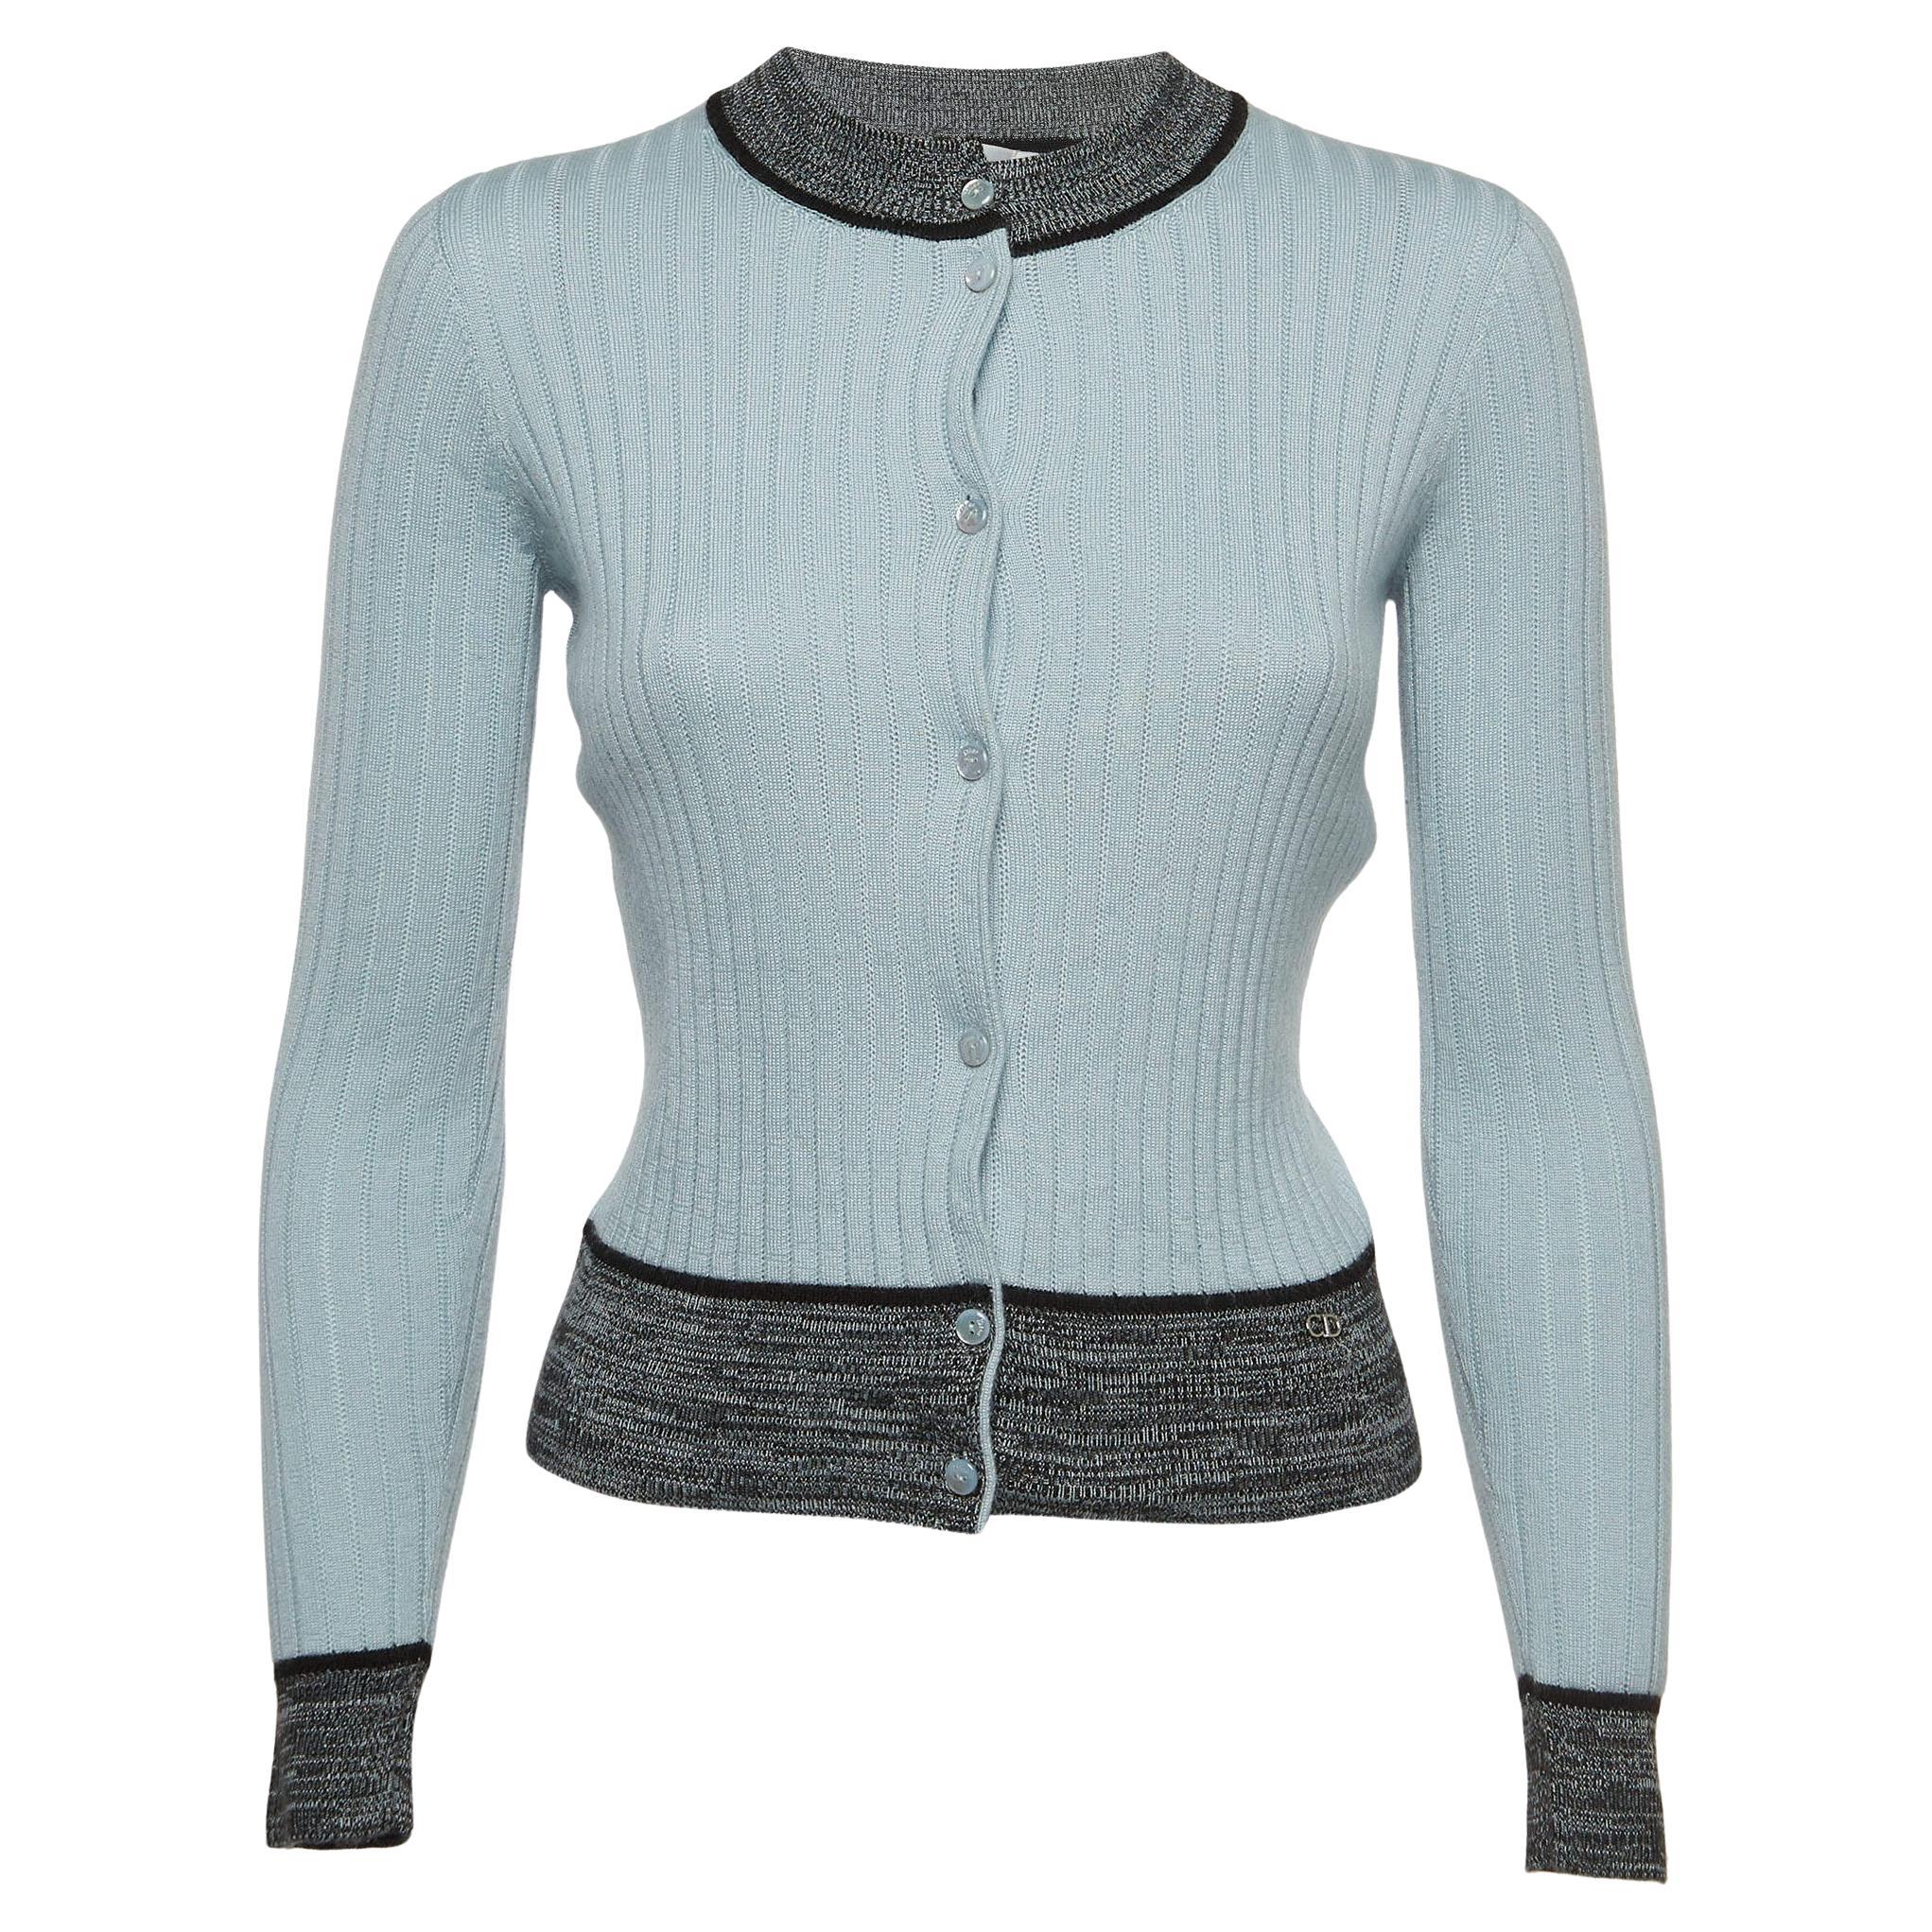 Christian Dior Light Blue Cashmere & Silk Knit Buttoned Sweater S